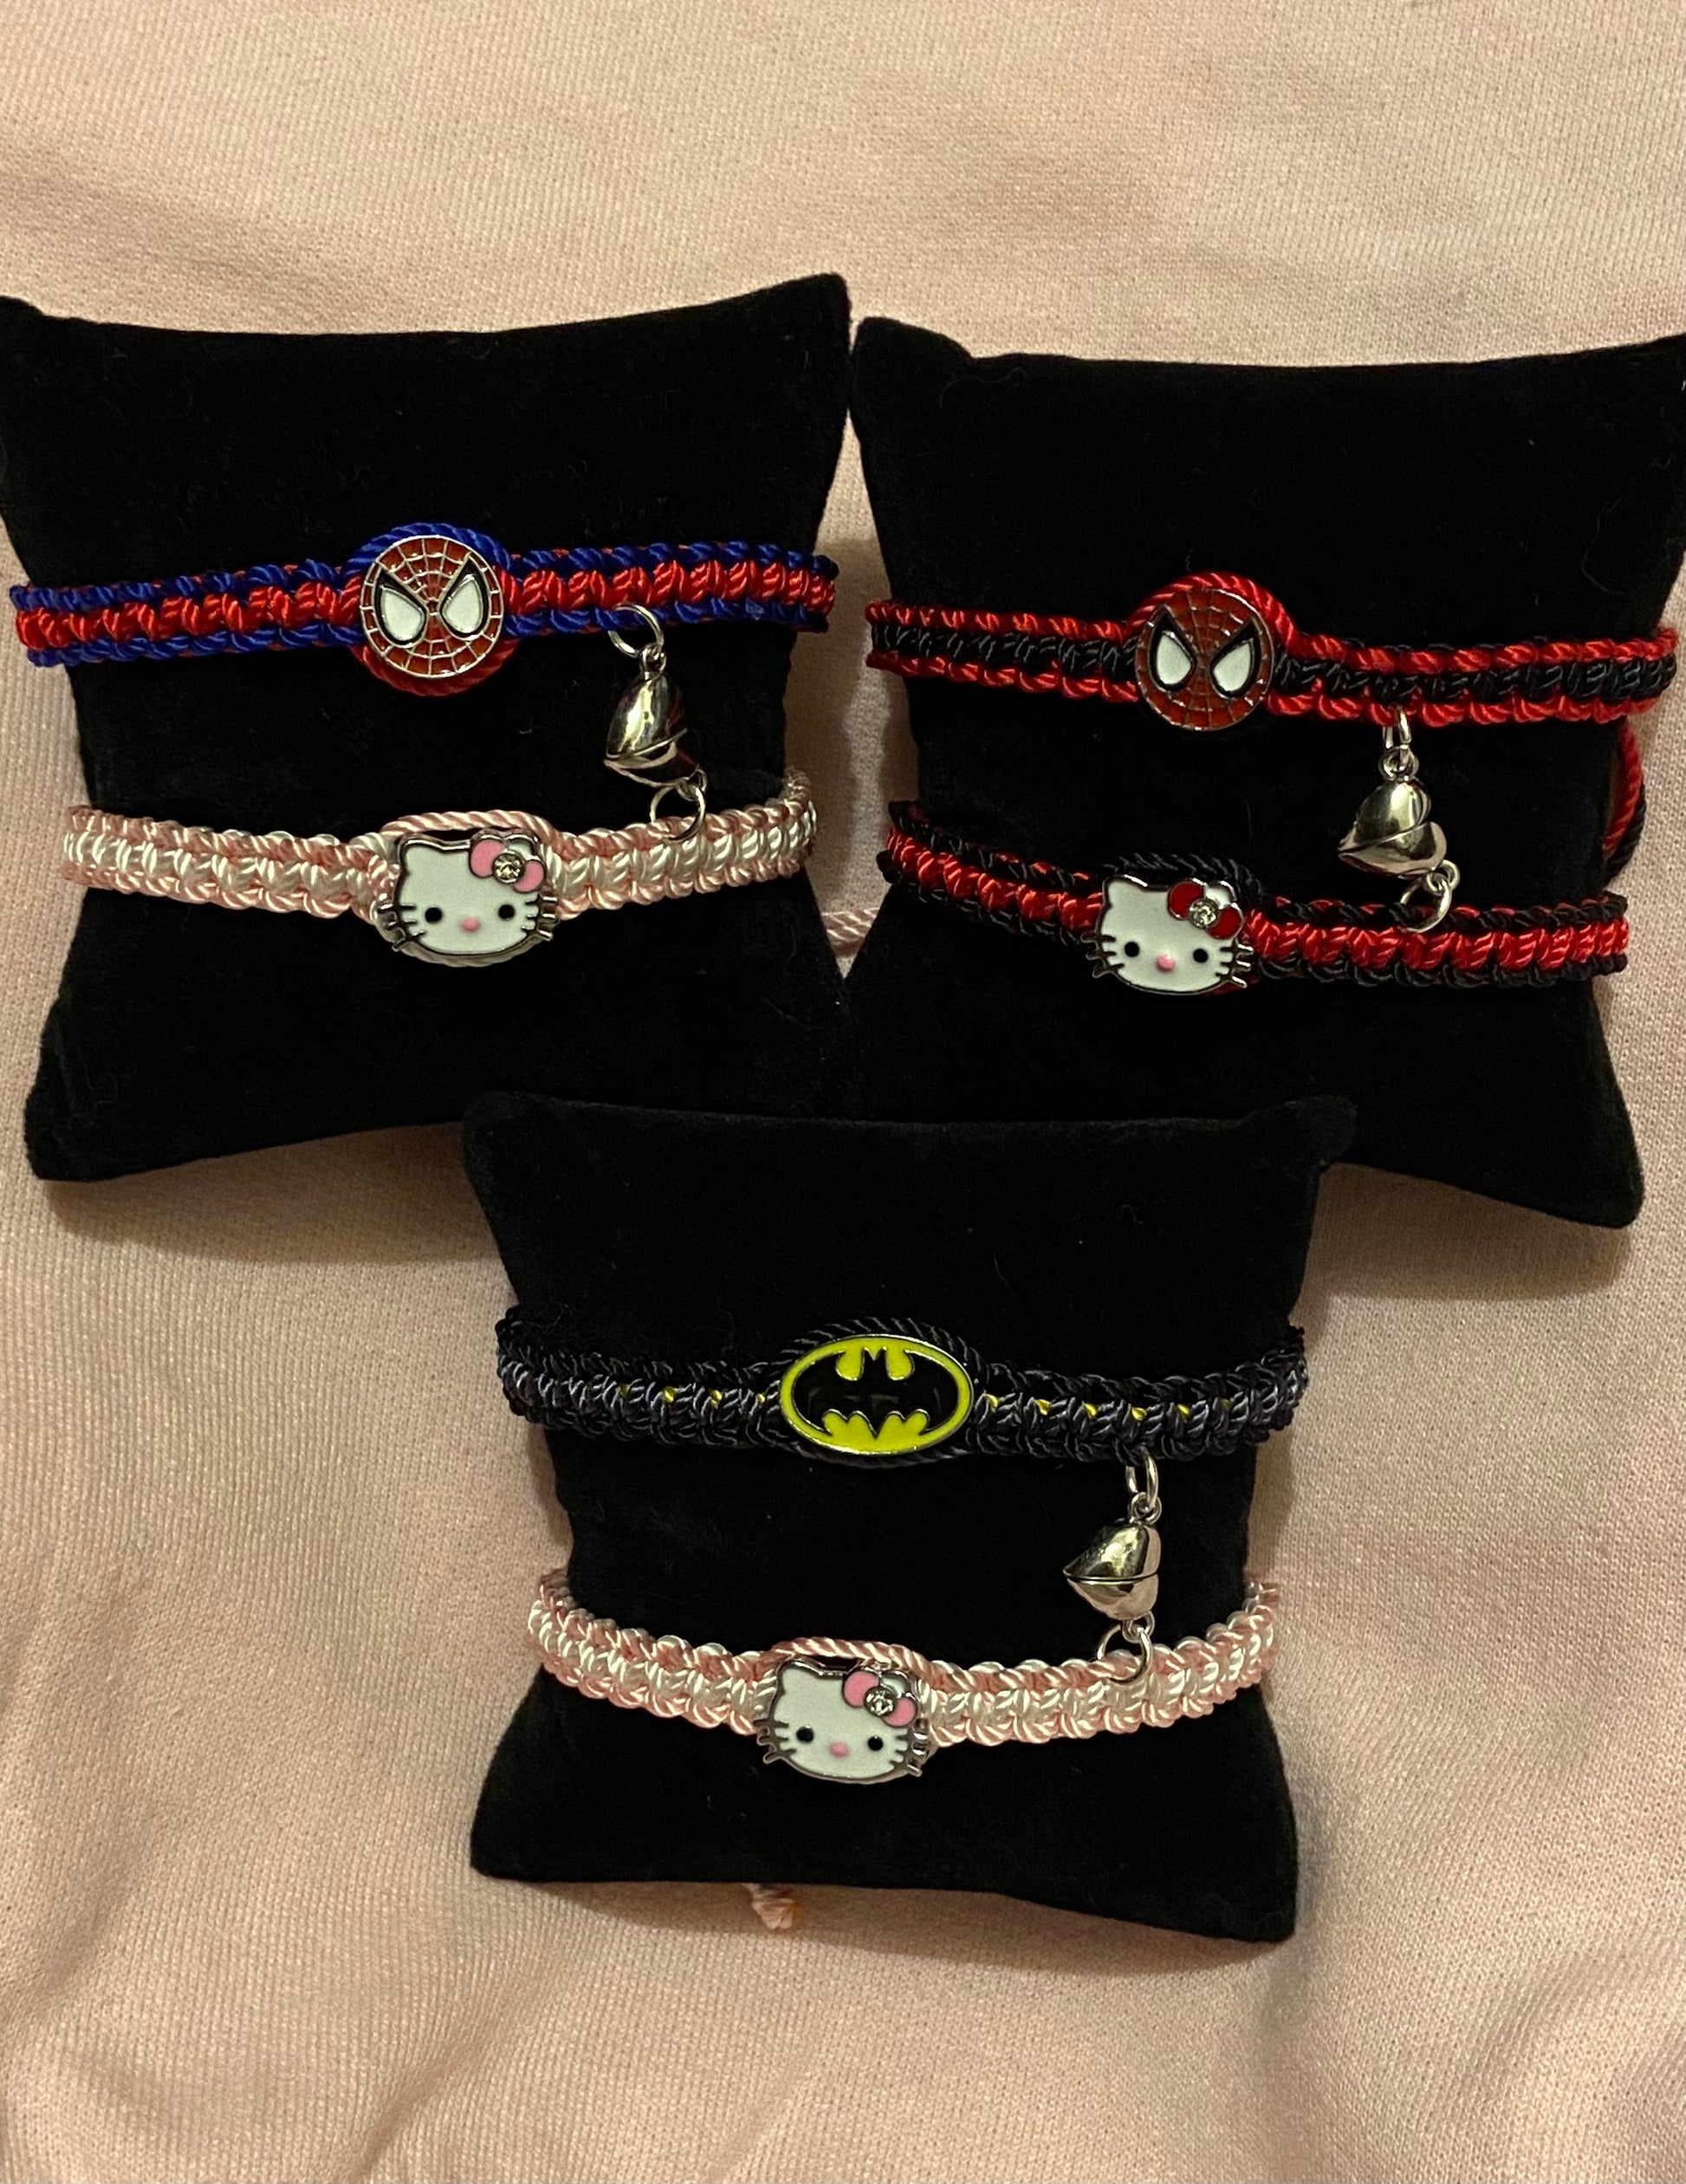 Hello Kitty x Spiderman Bracelet Set - Pre order – L3 Bracelets